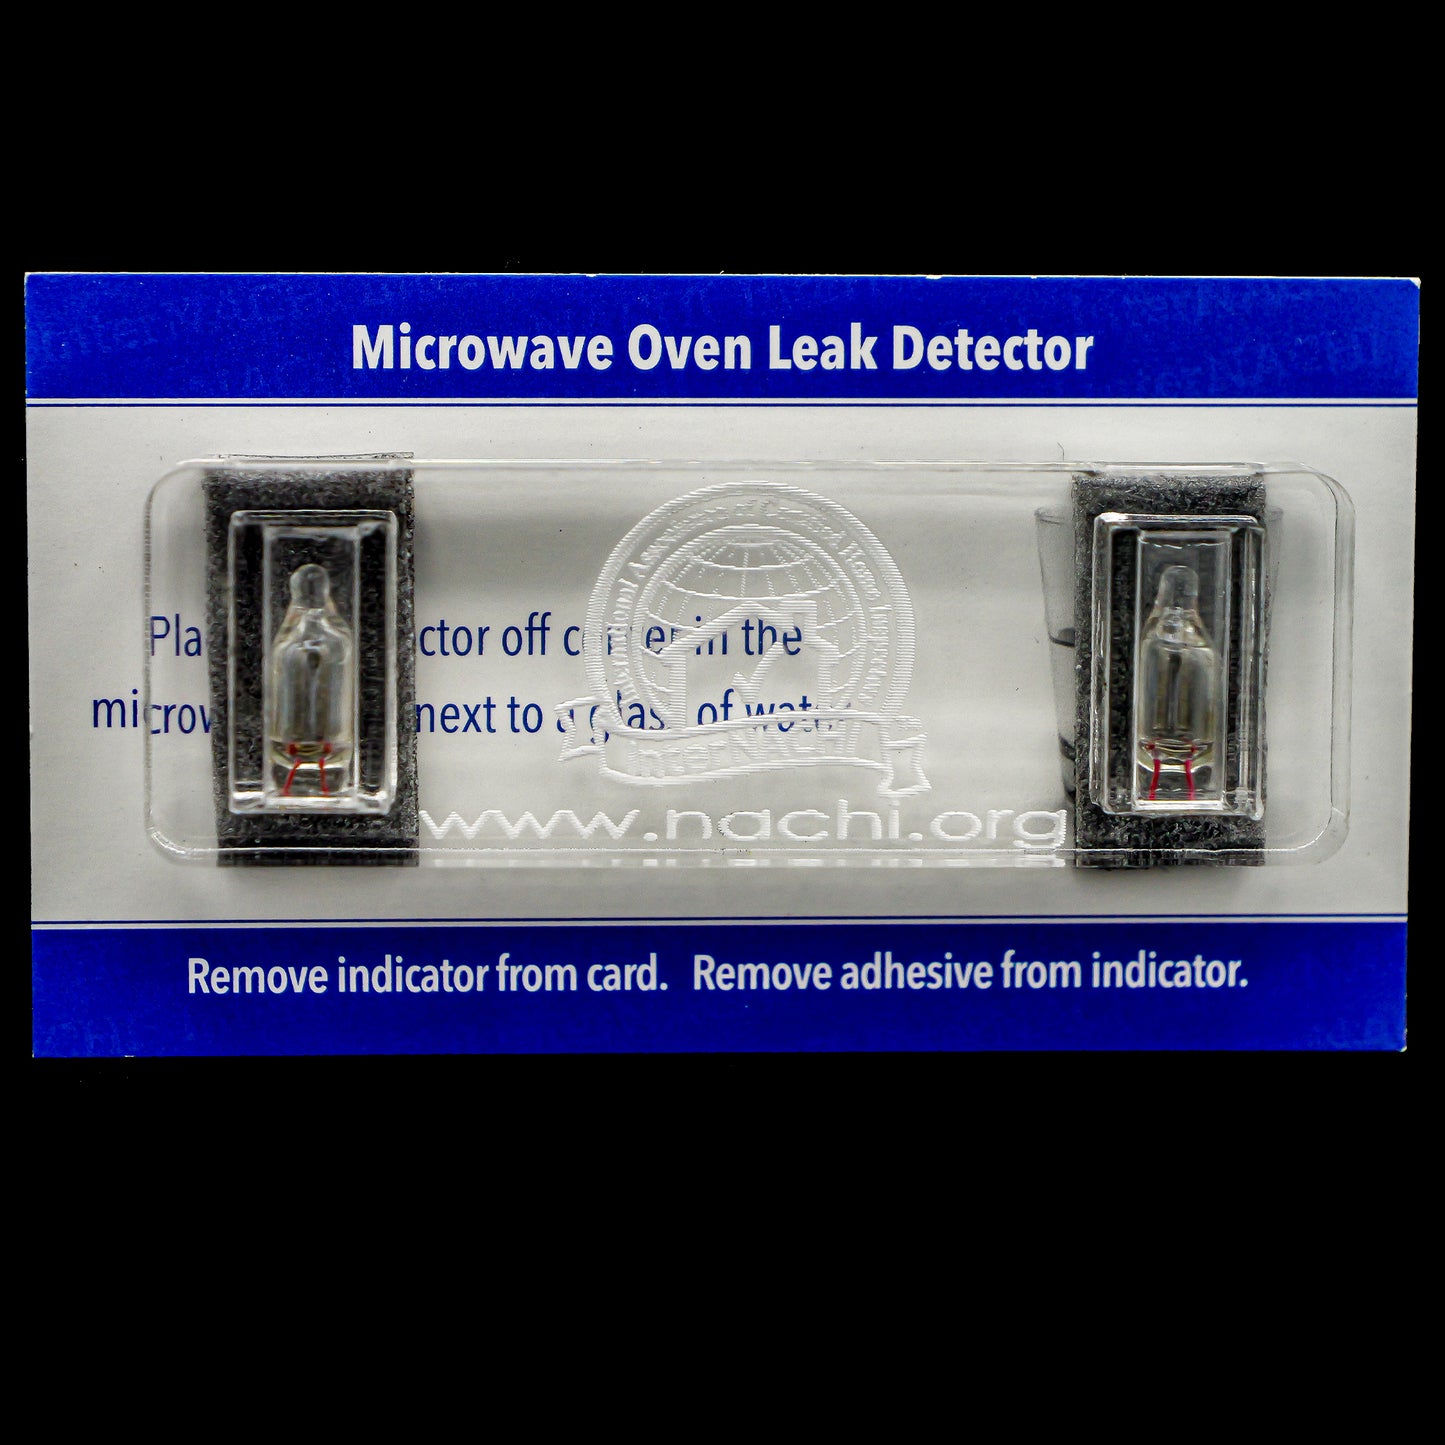 InterNACHI LED Microwave Oven Testers/Leak Detectors